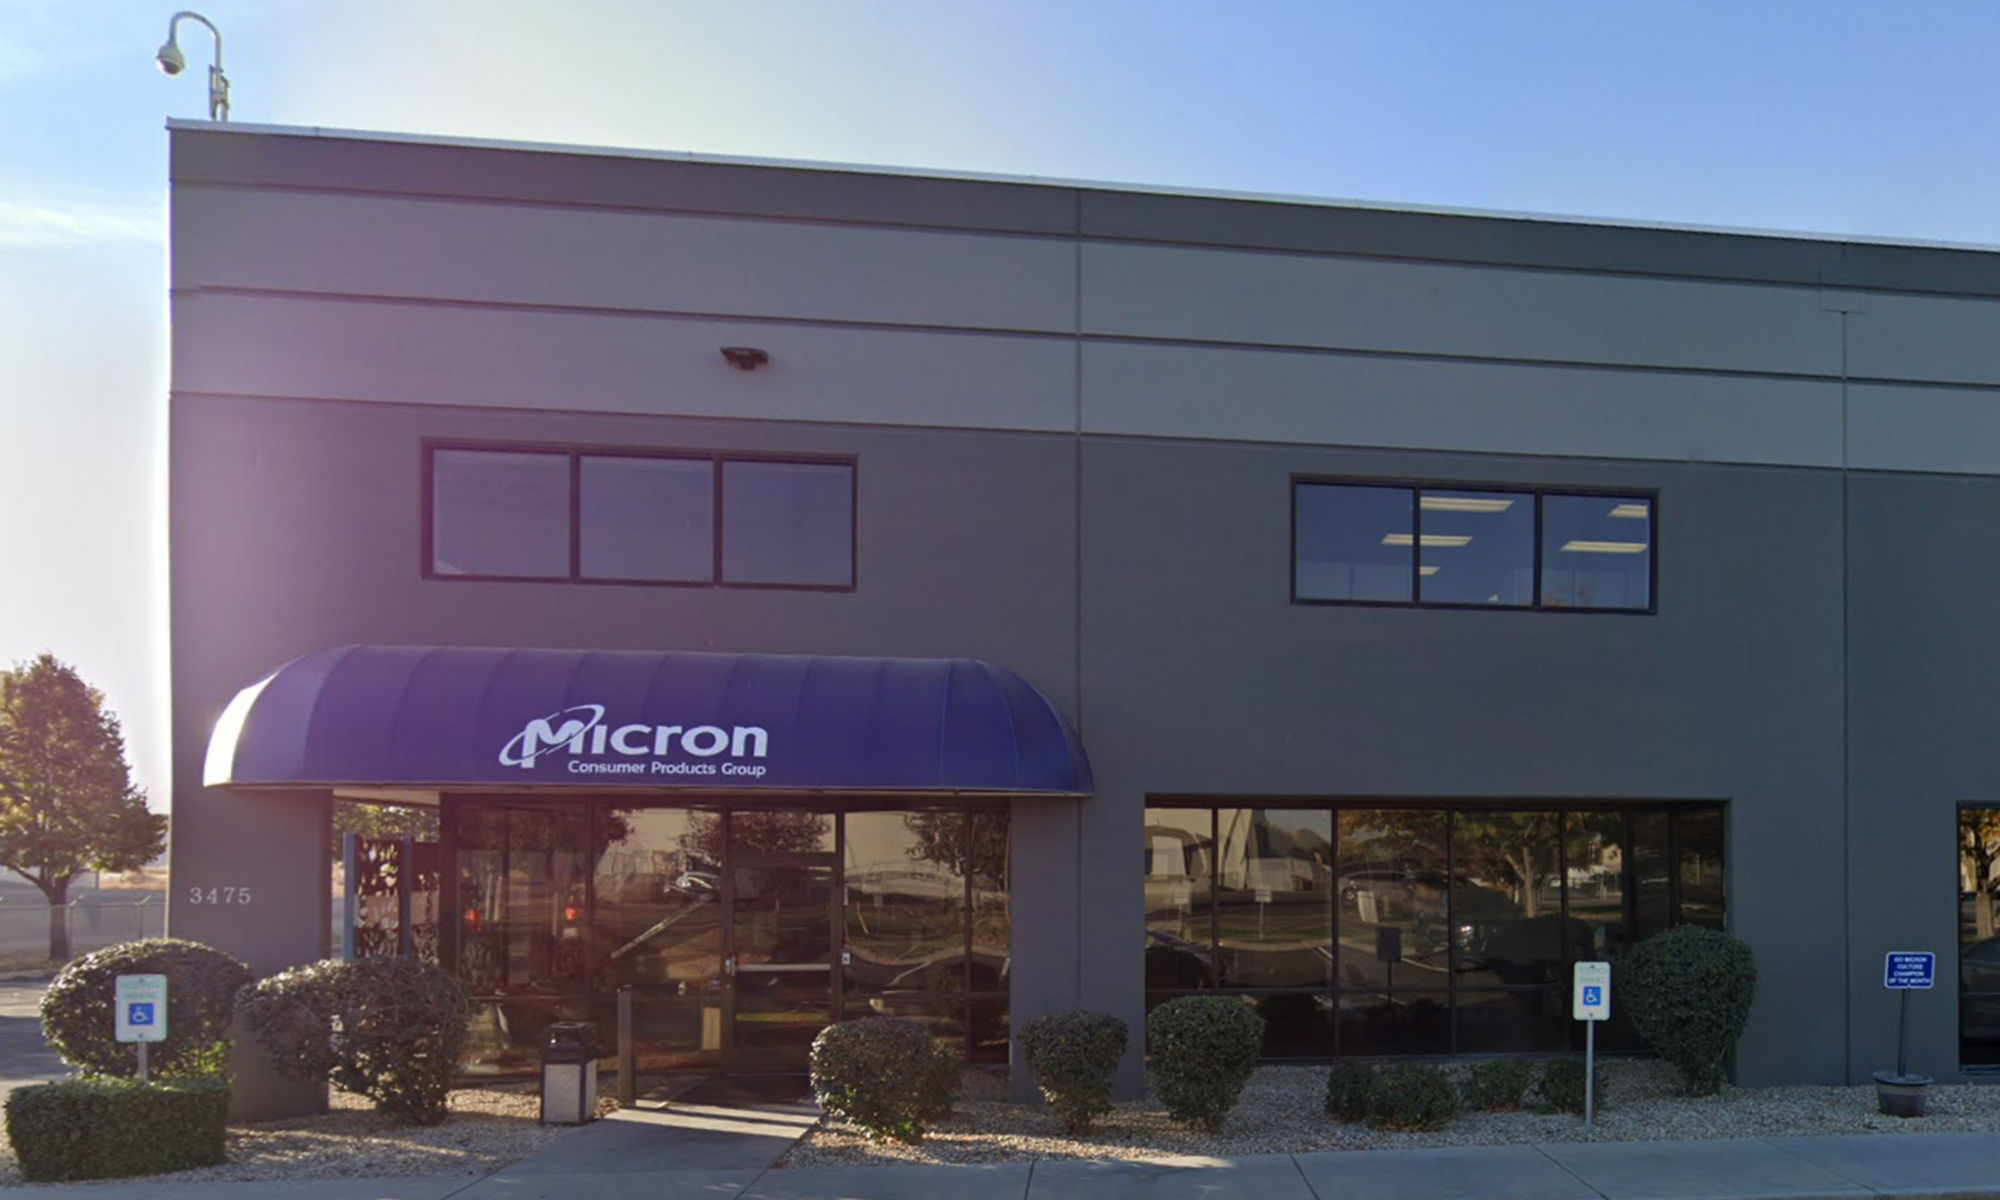 Micron building in Meridian, ID